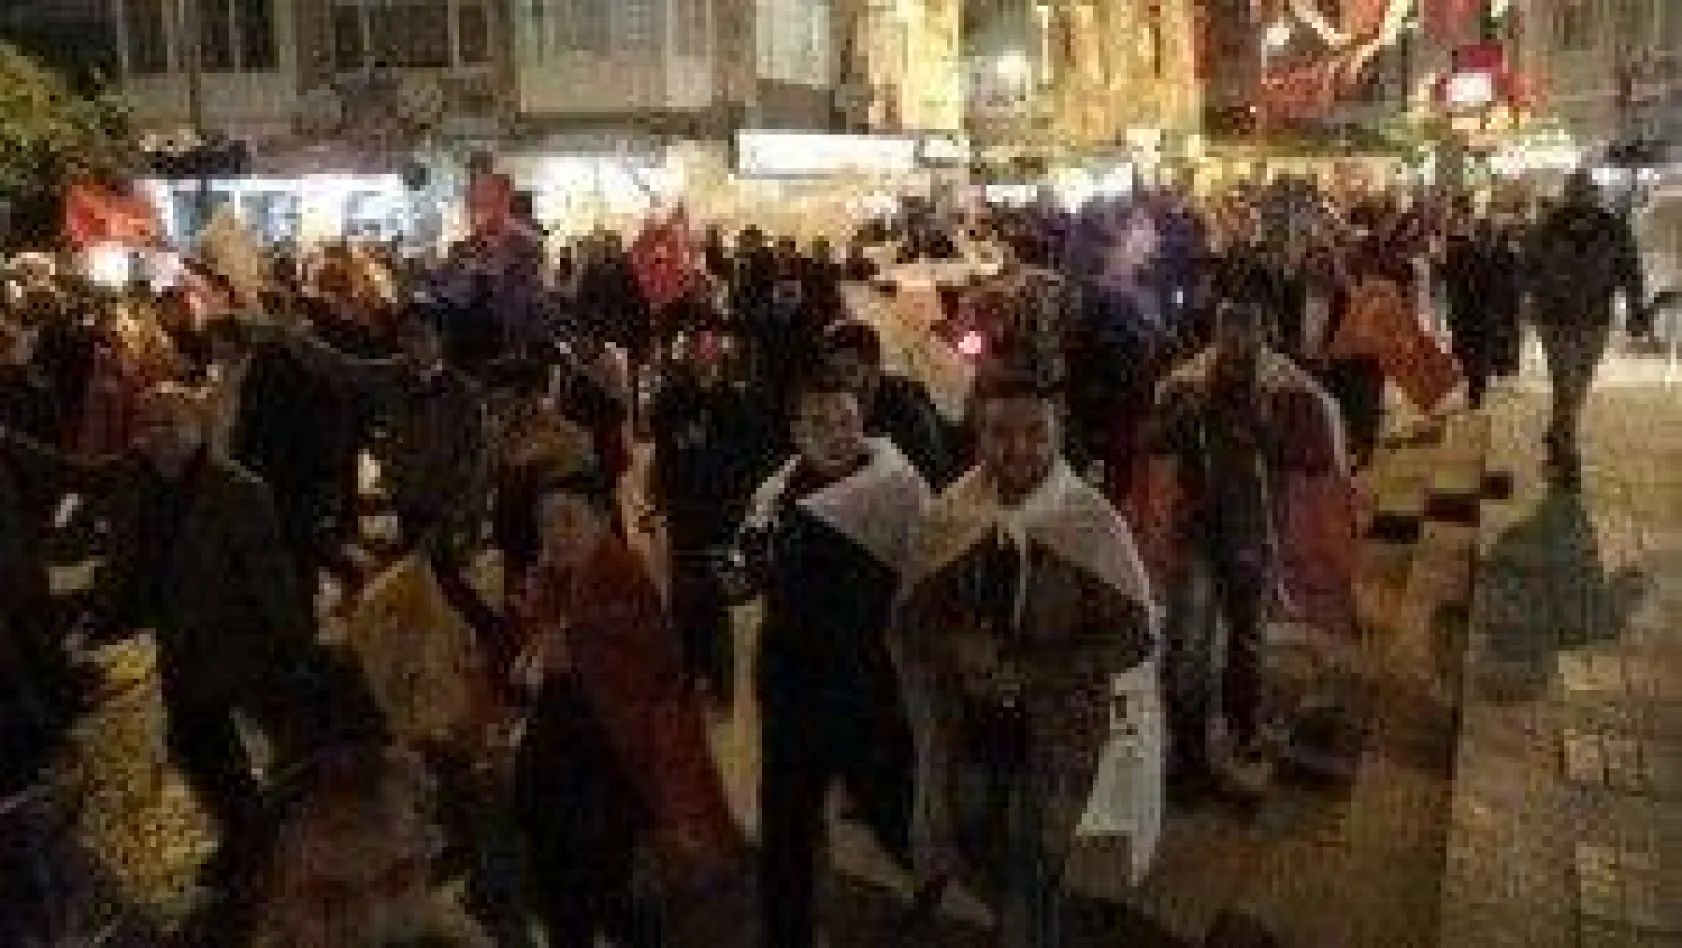 AK Parti Silivri'de zaferi kutluyor